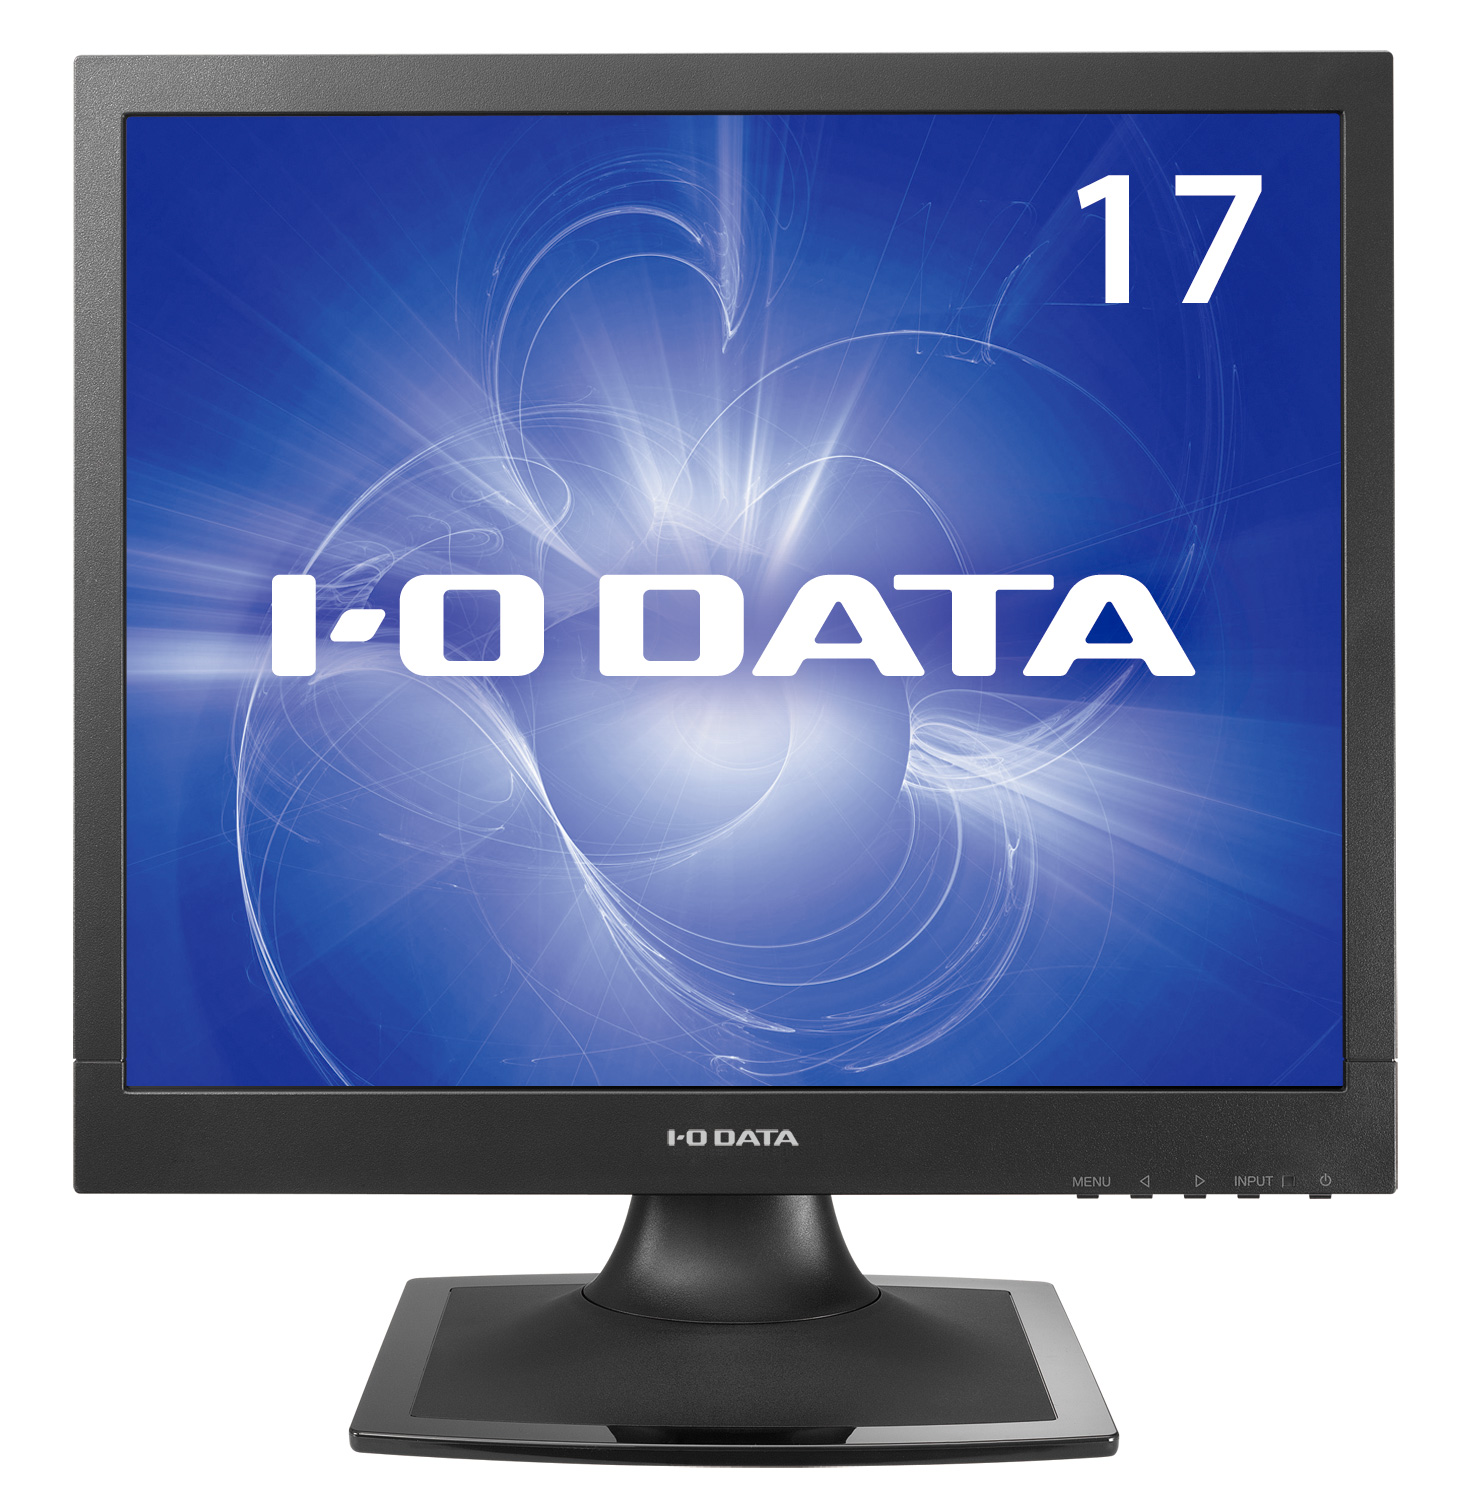 I-O DATA SE17 17型 液晶 ディスプレイ ブルーライト低減機能付き